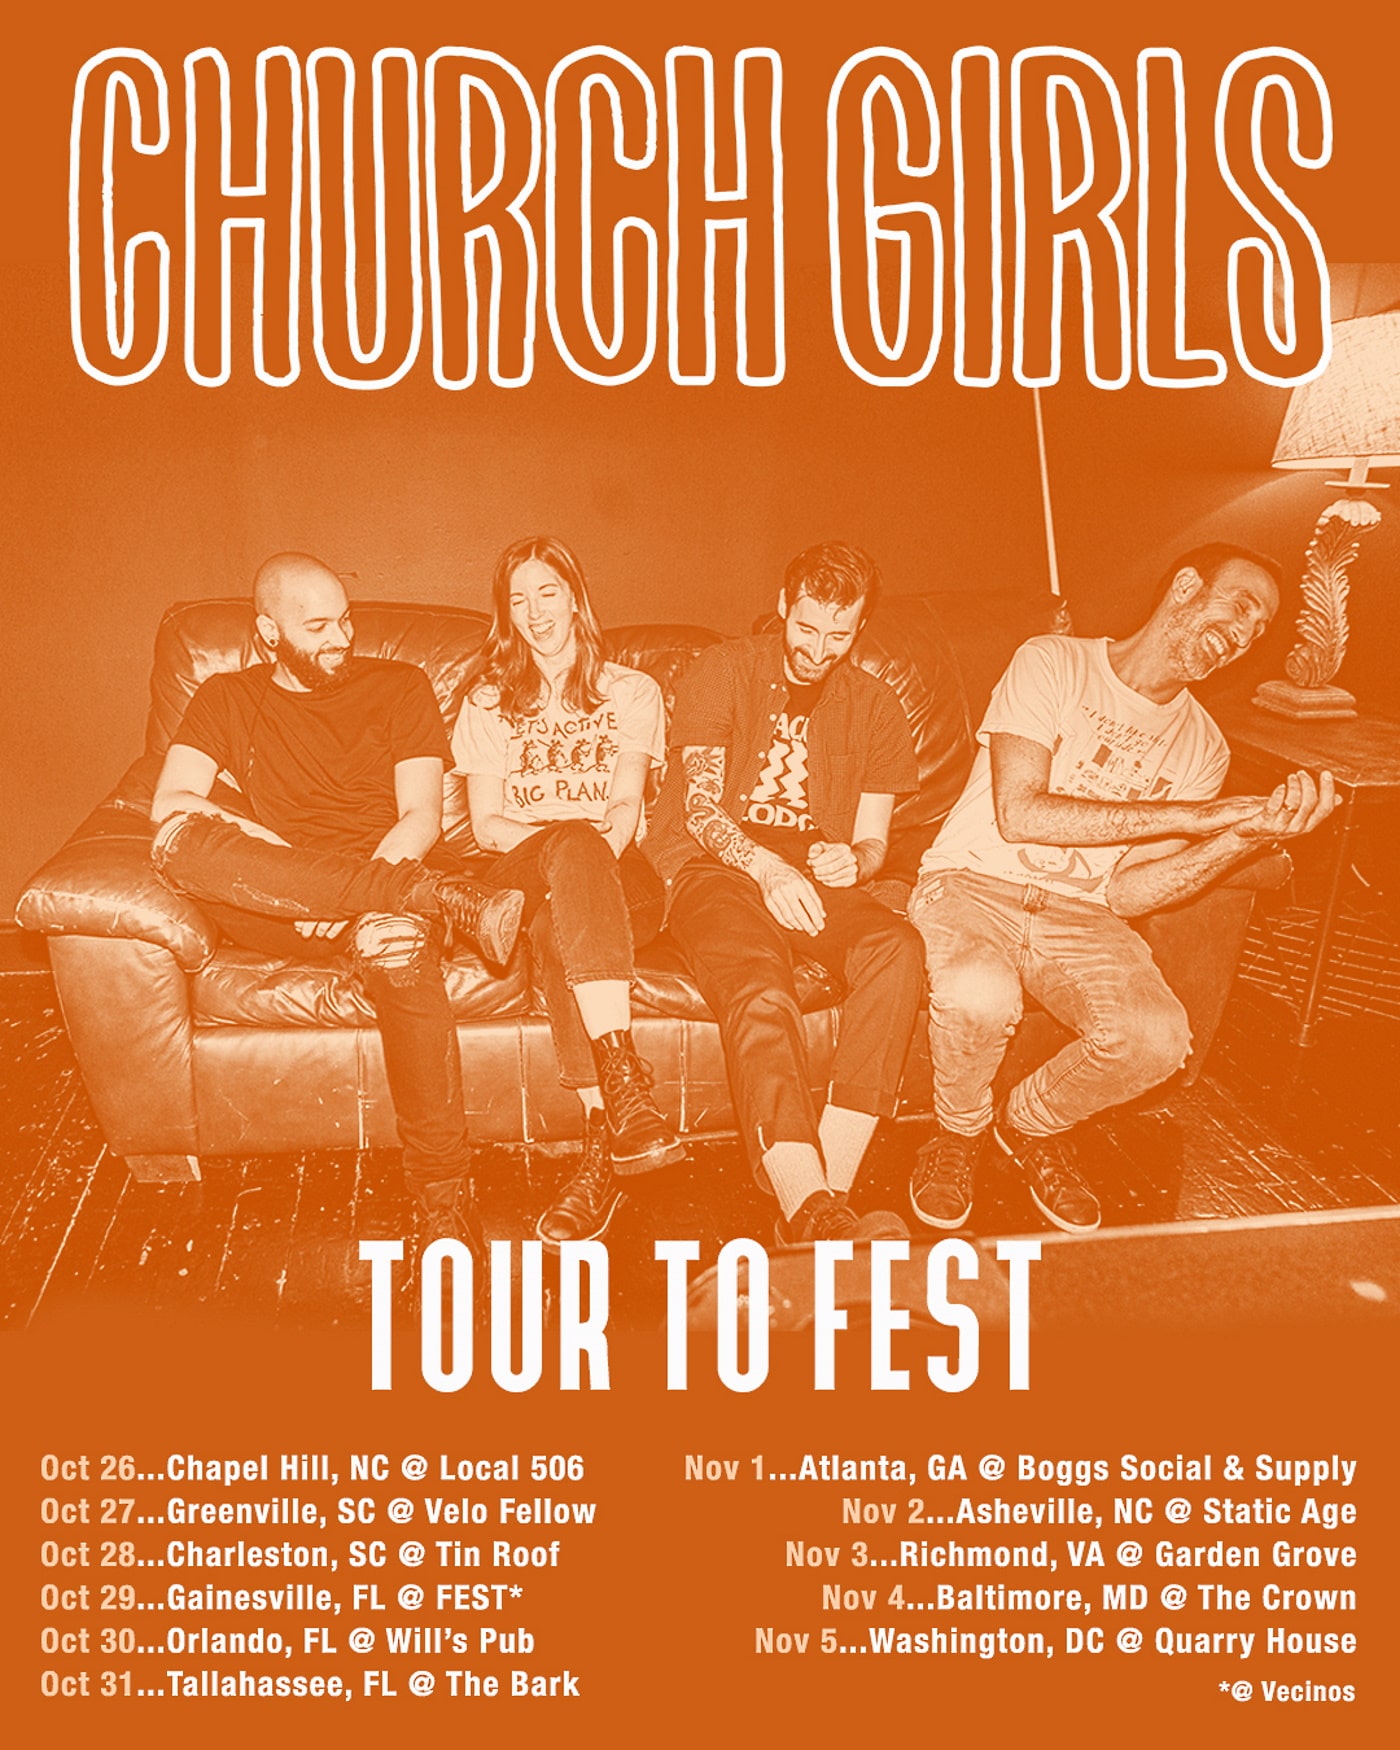 Church Girls - tour to fest